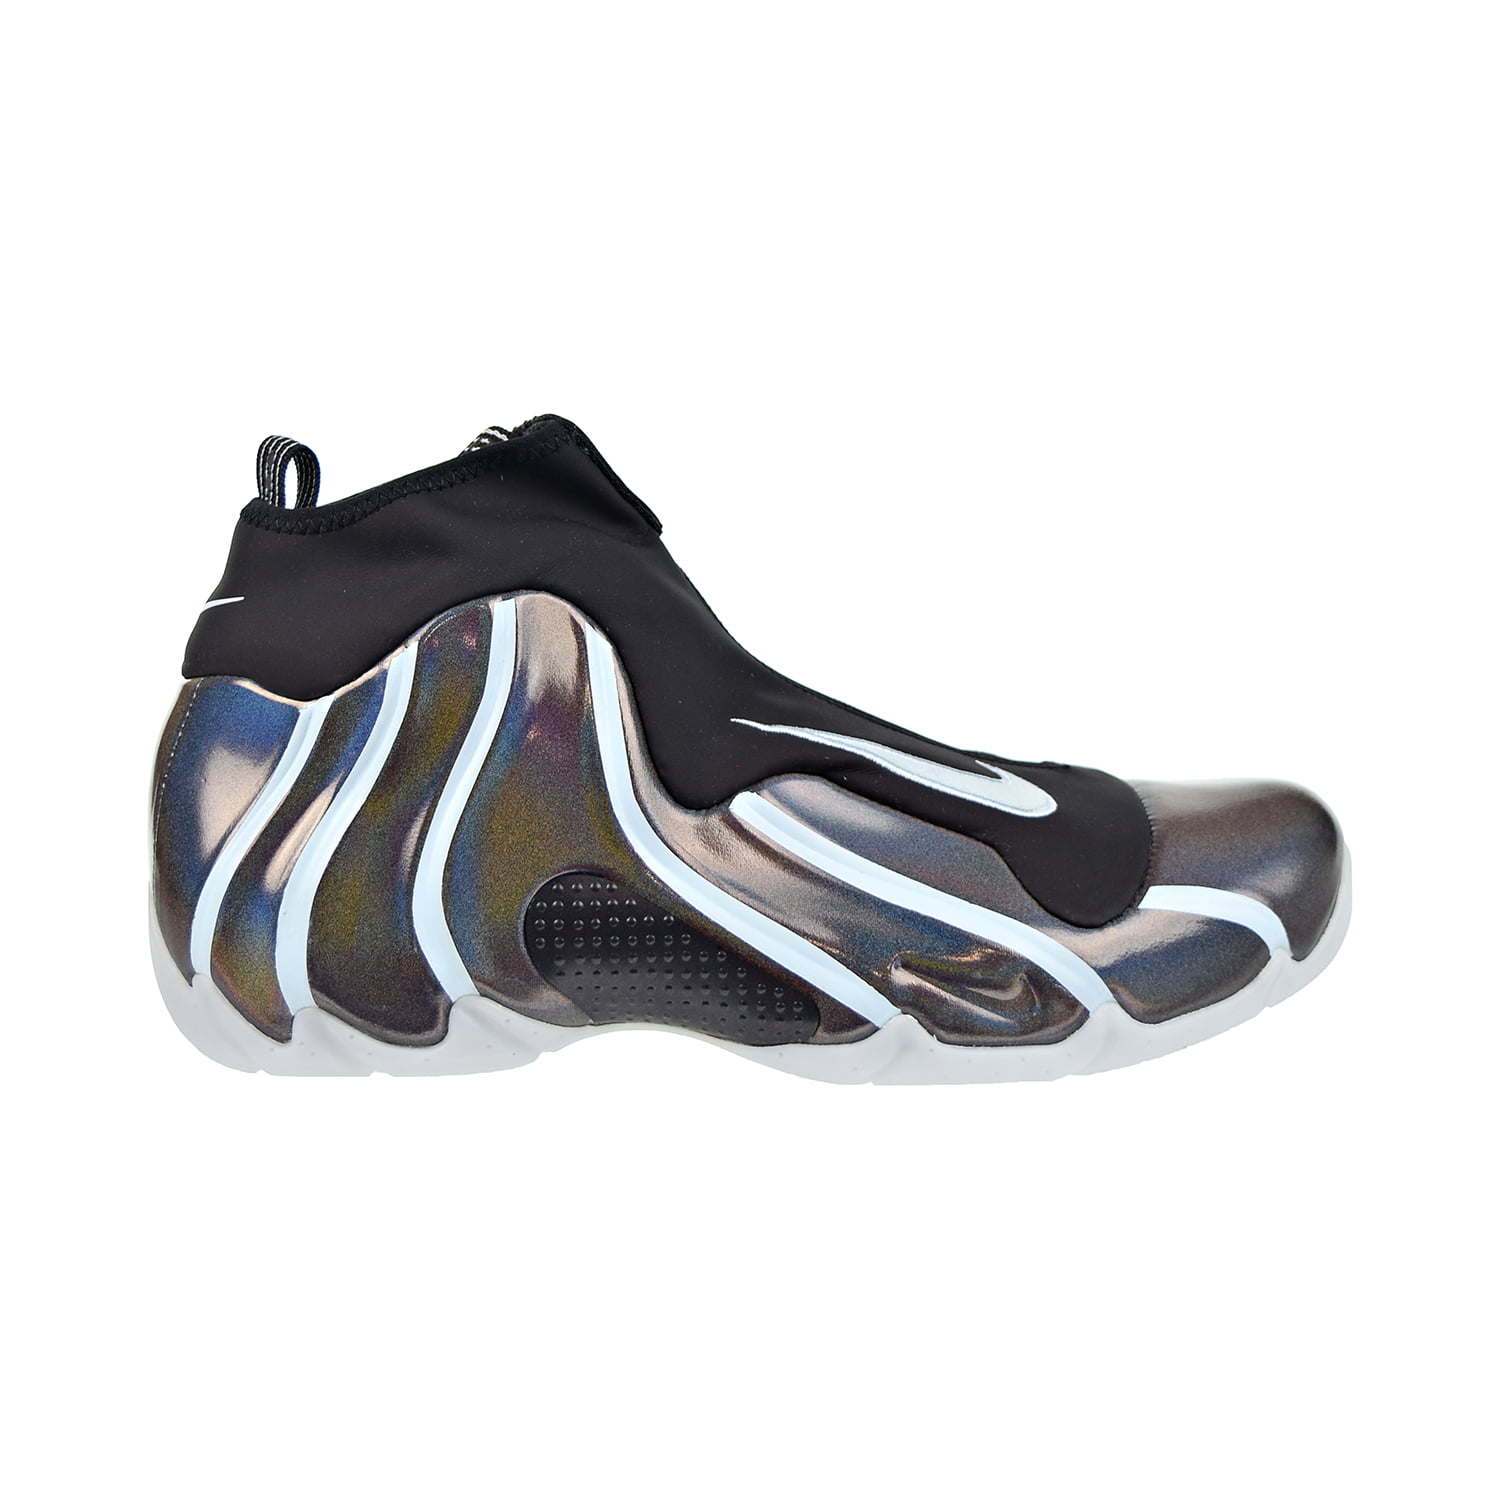 Nike Air Flightposite Mens Shoes Black-Topaz Mist ao9378-001